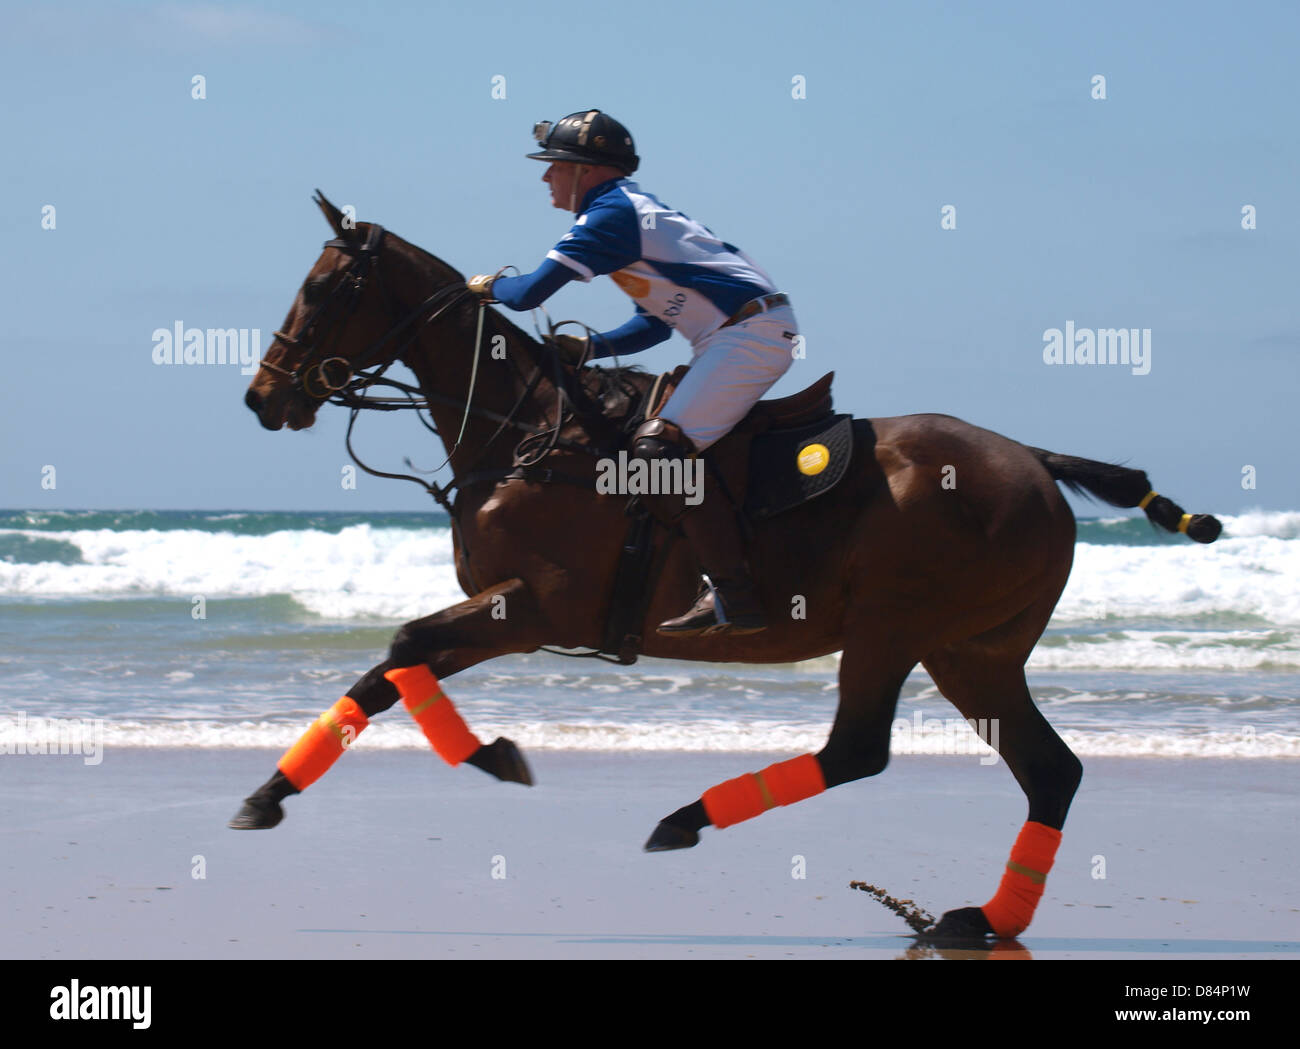 Polo player riding horse along beach, Watergate Bay, Cornwall, UK 2013 Stock Photo